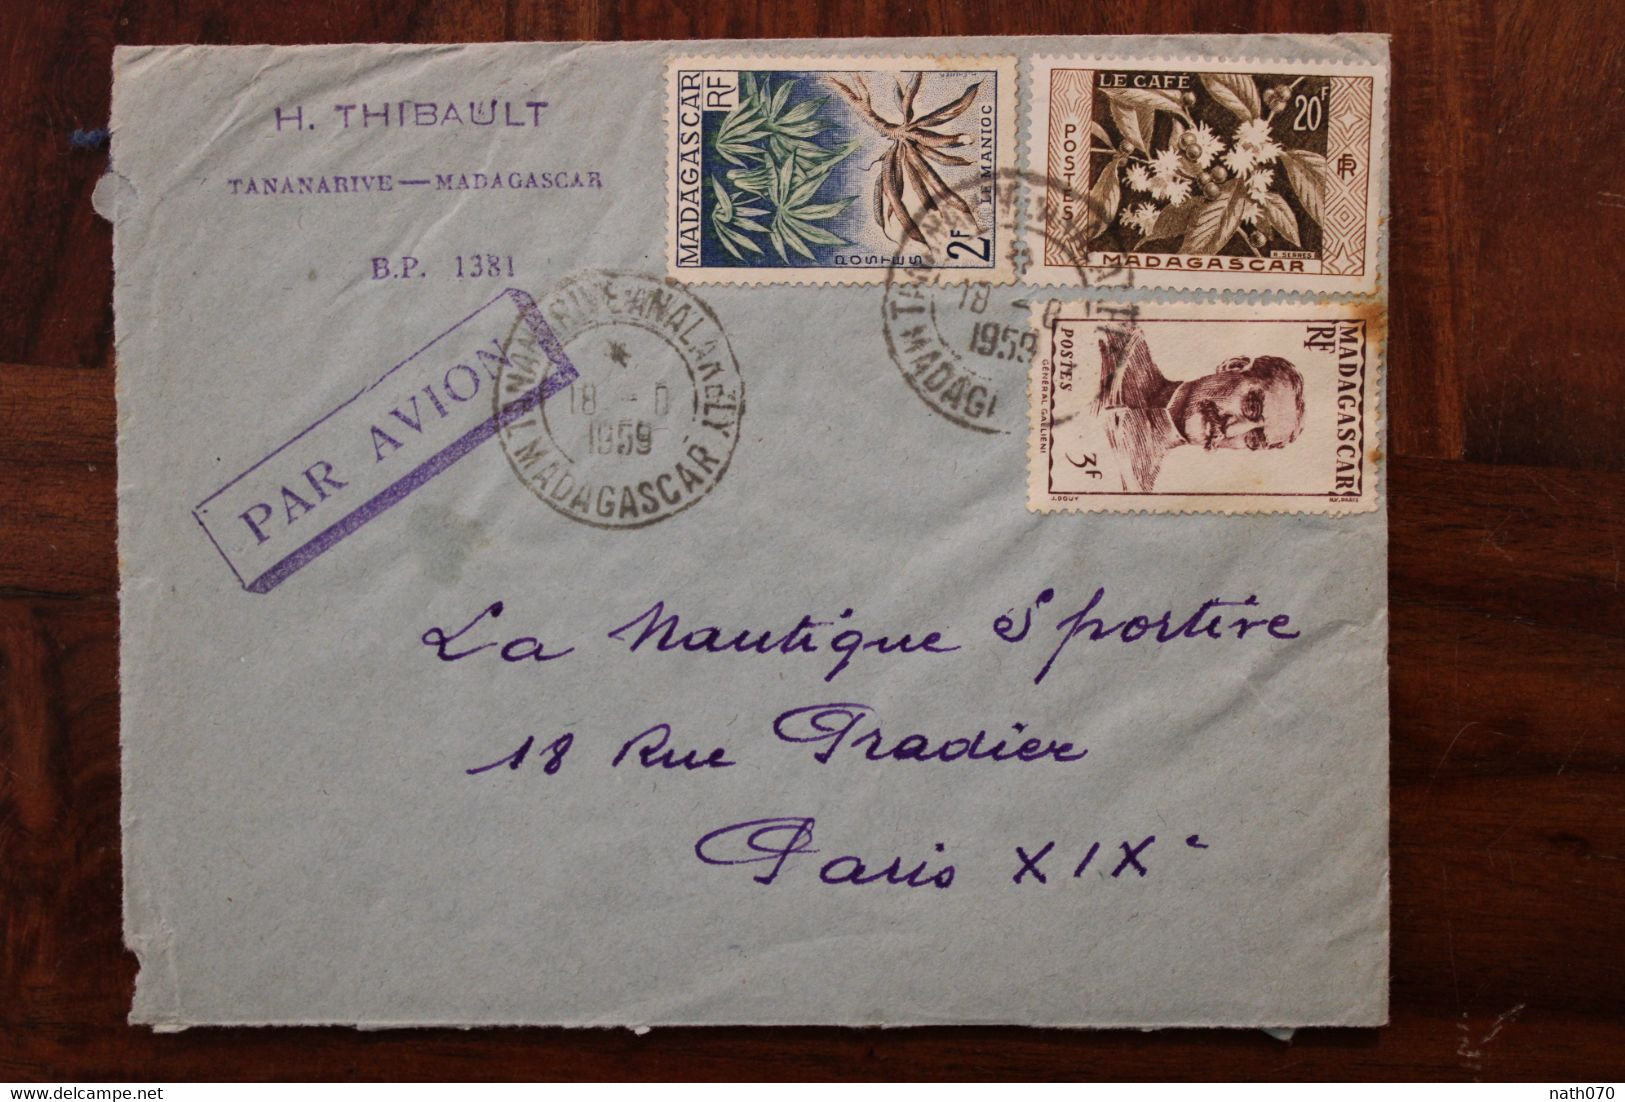 1959 Madagascar France Cover Air Mail Par Avion - Lettres & Documents